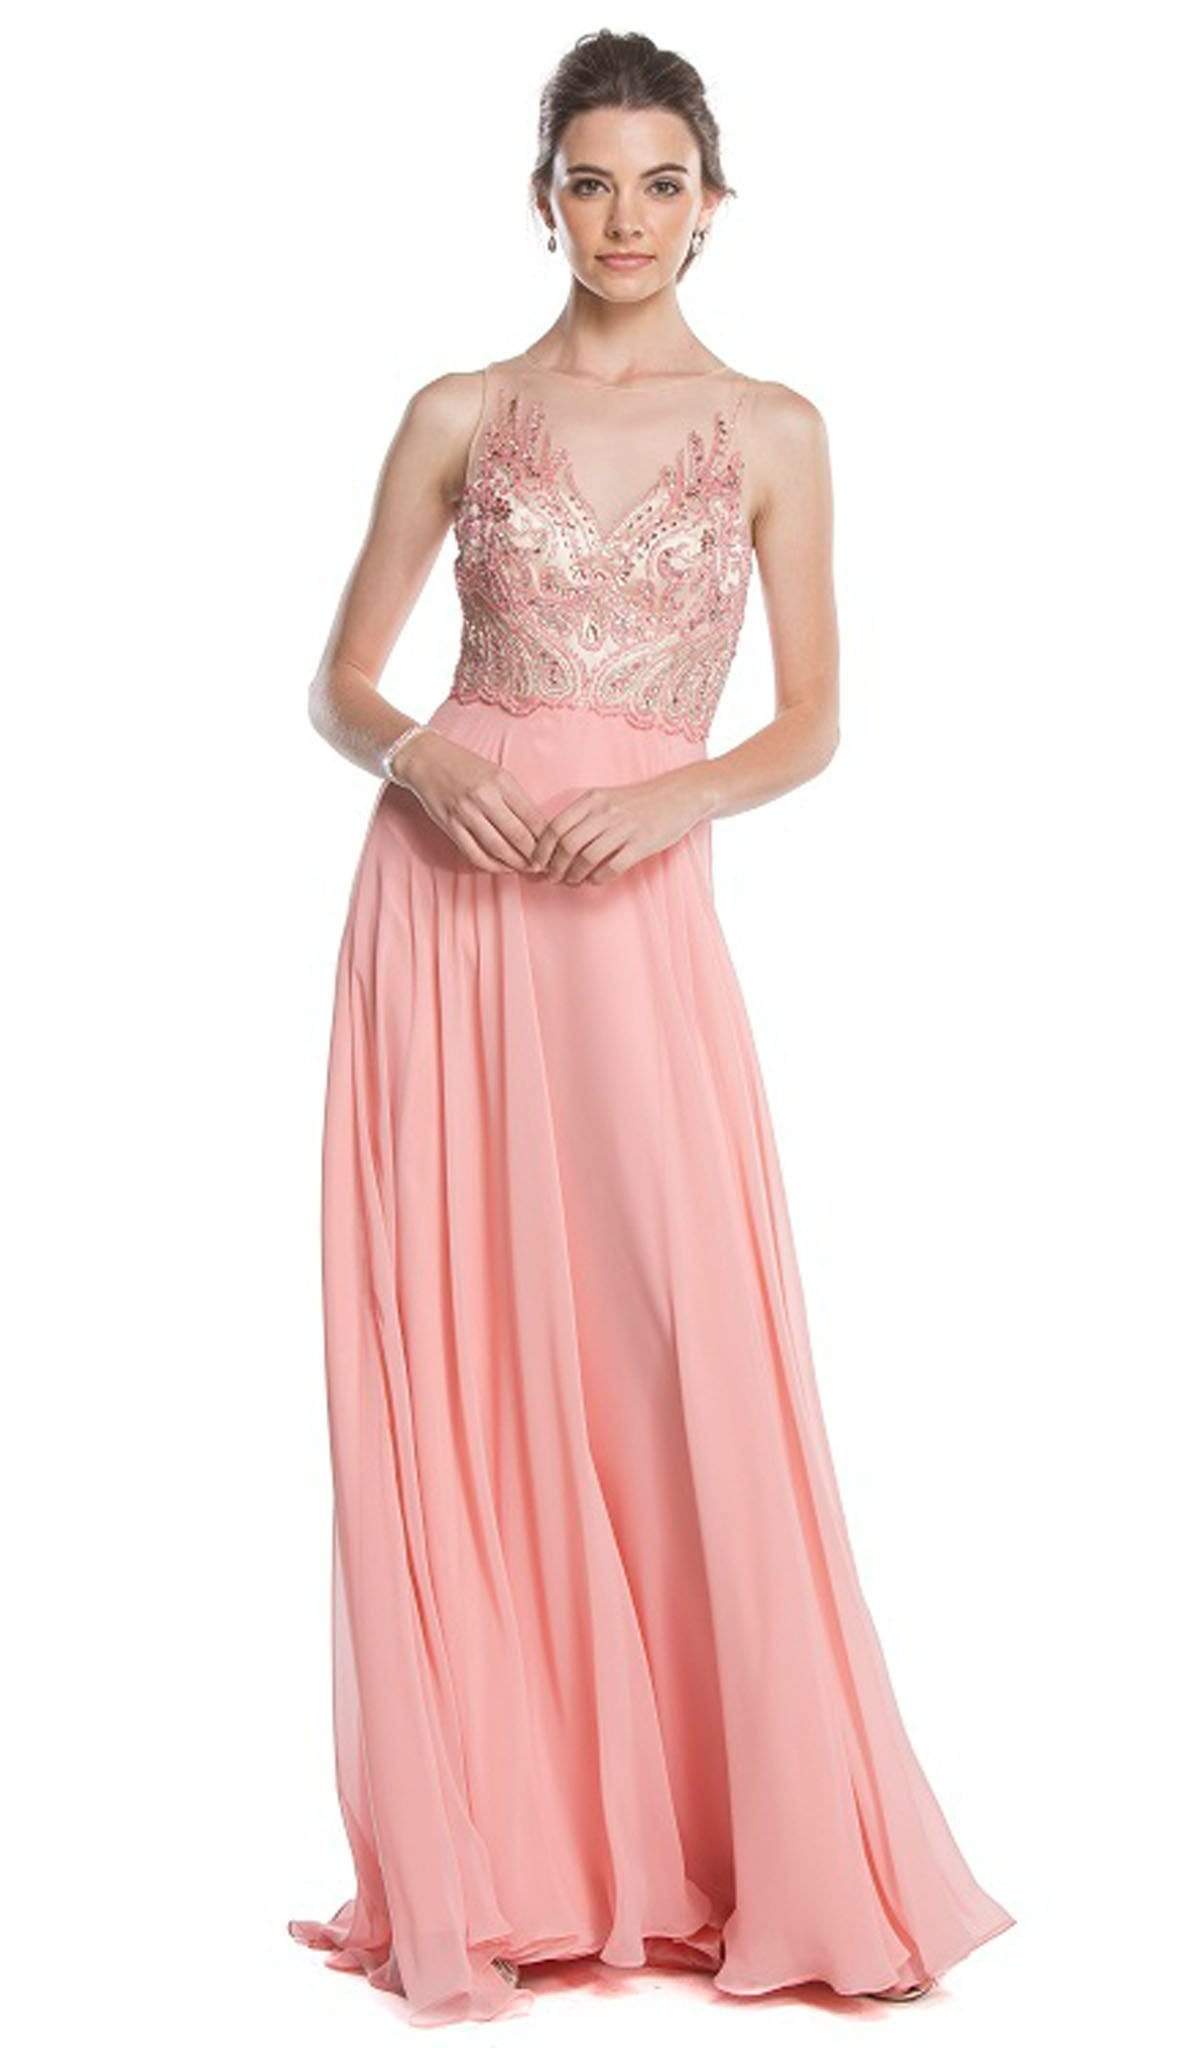 Image of Aspeed Design - Embellished Illusion Neck A-line Prom Dress